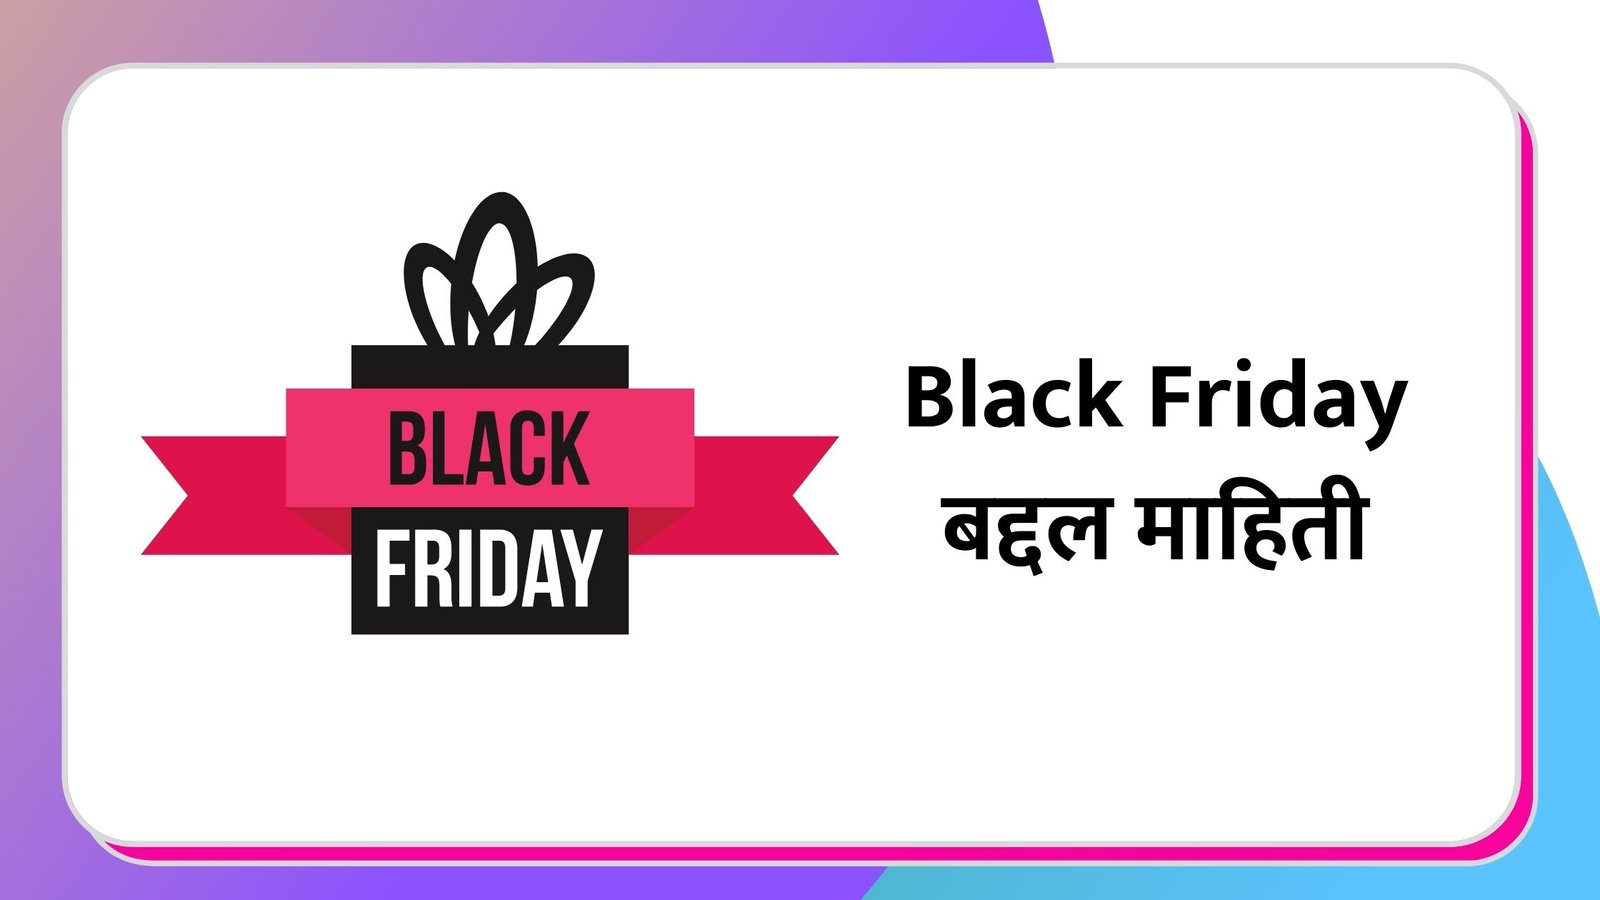 Black Friday information in Marathi